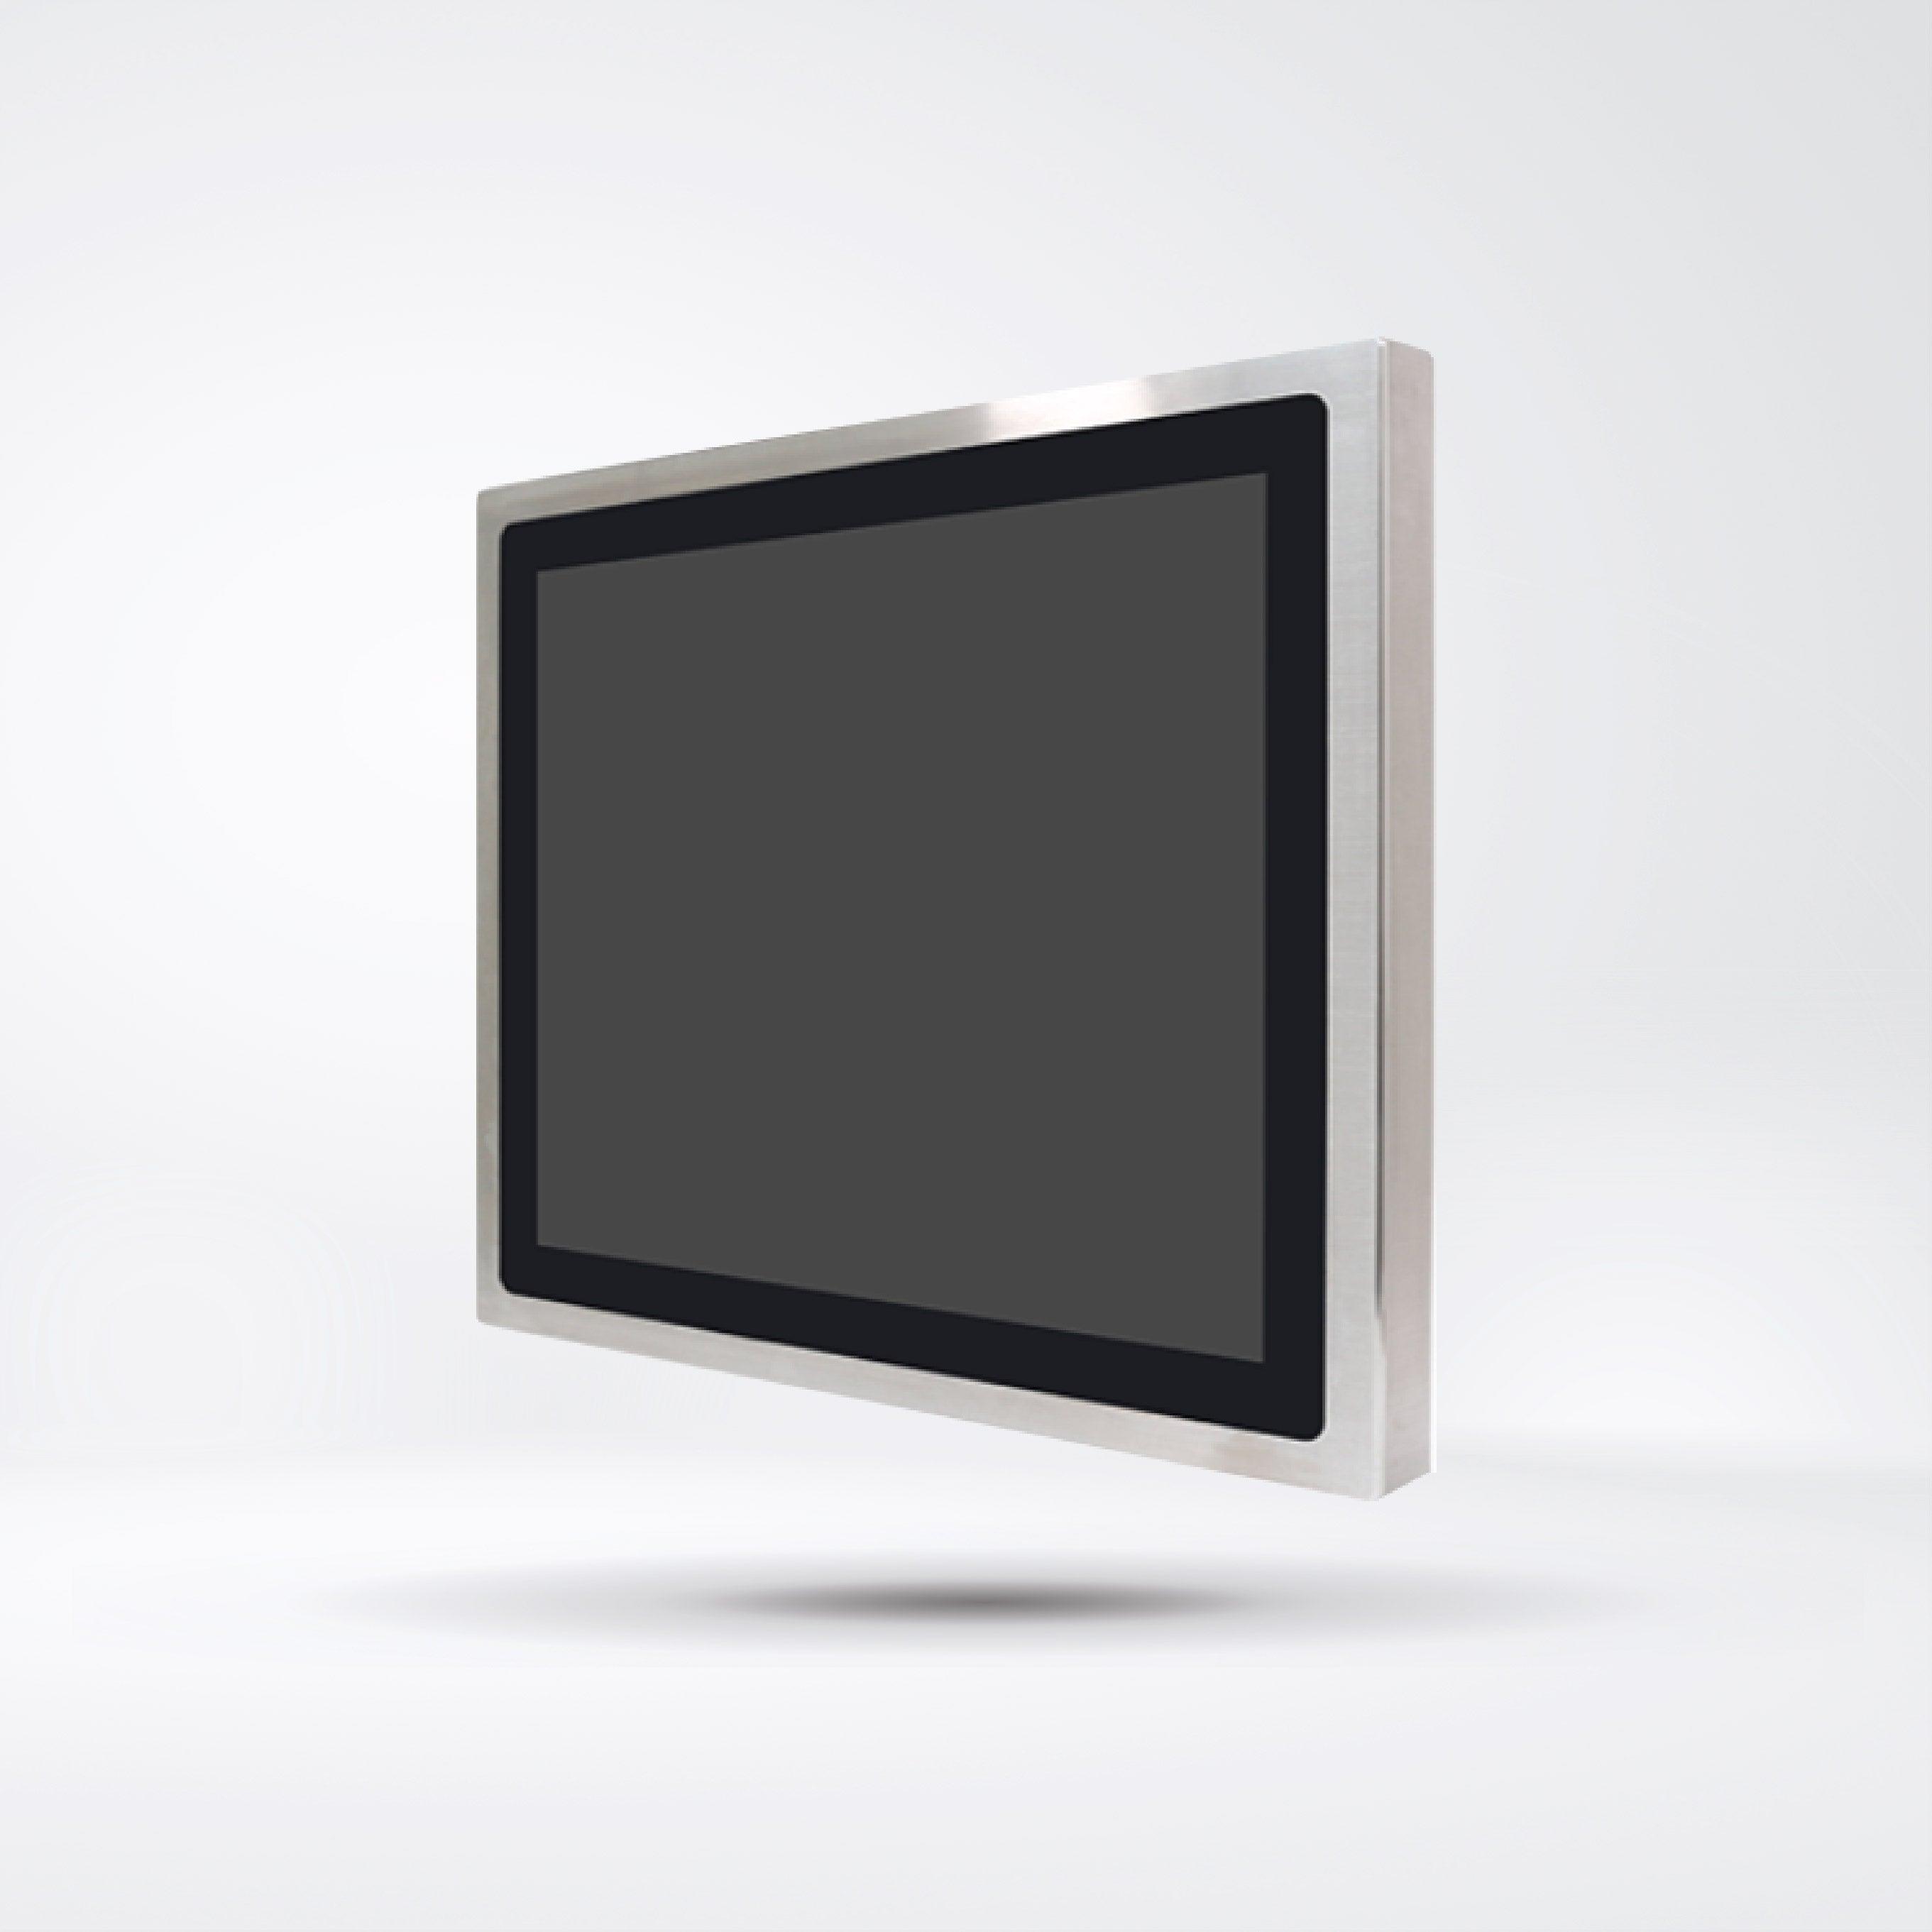 AEx-919APH 19” Intel Skylake IP66 Stainless Steel Panel PC, Luminance : 1,000 (cd/m²) - Riverplus